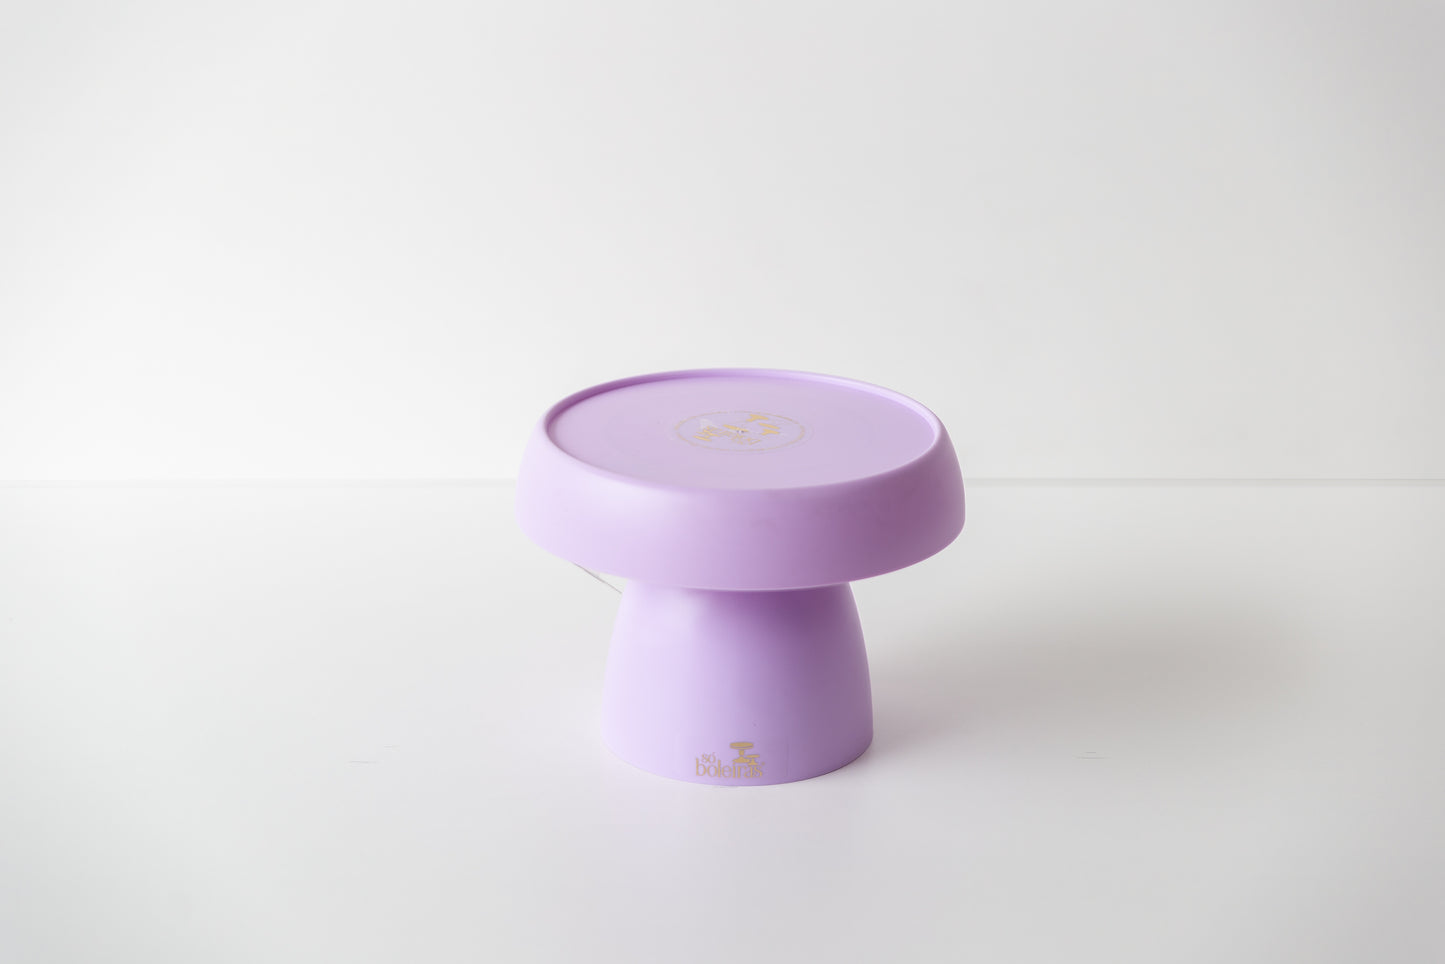 Lilac Mushroom Matte Cake stand - 150mmx170mm